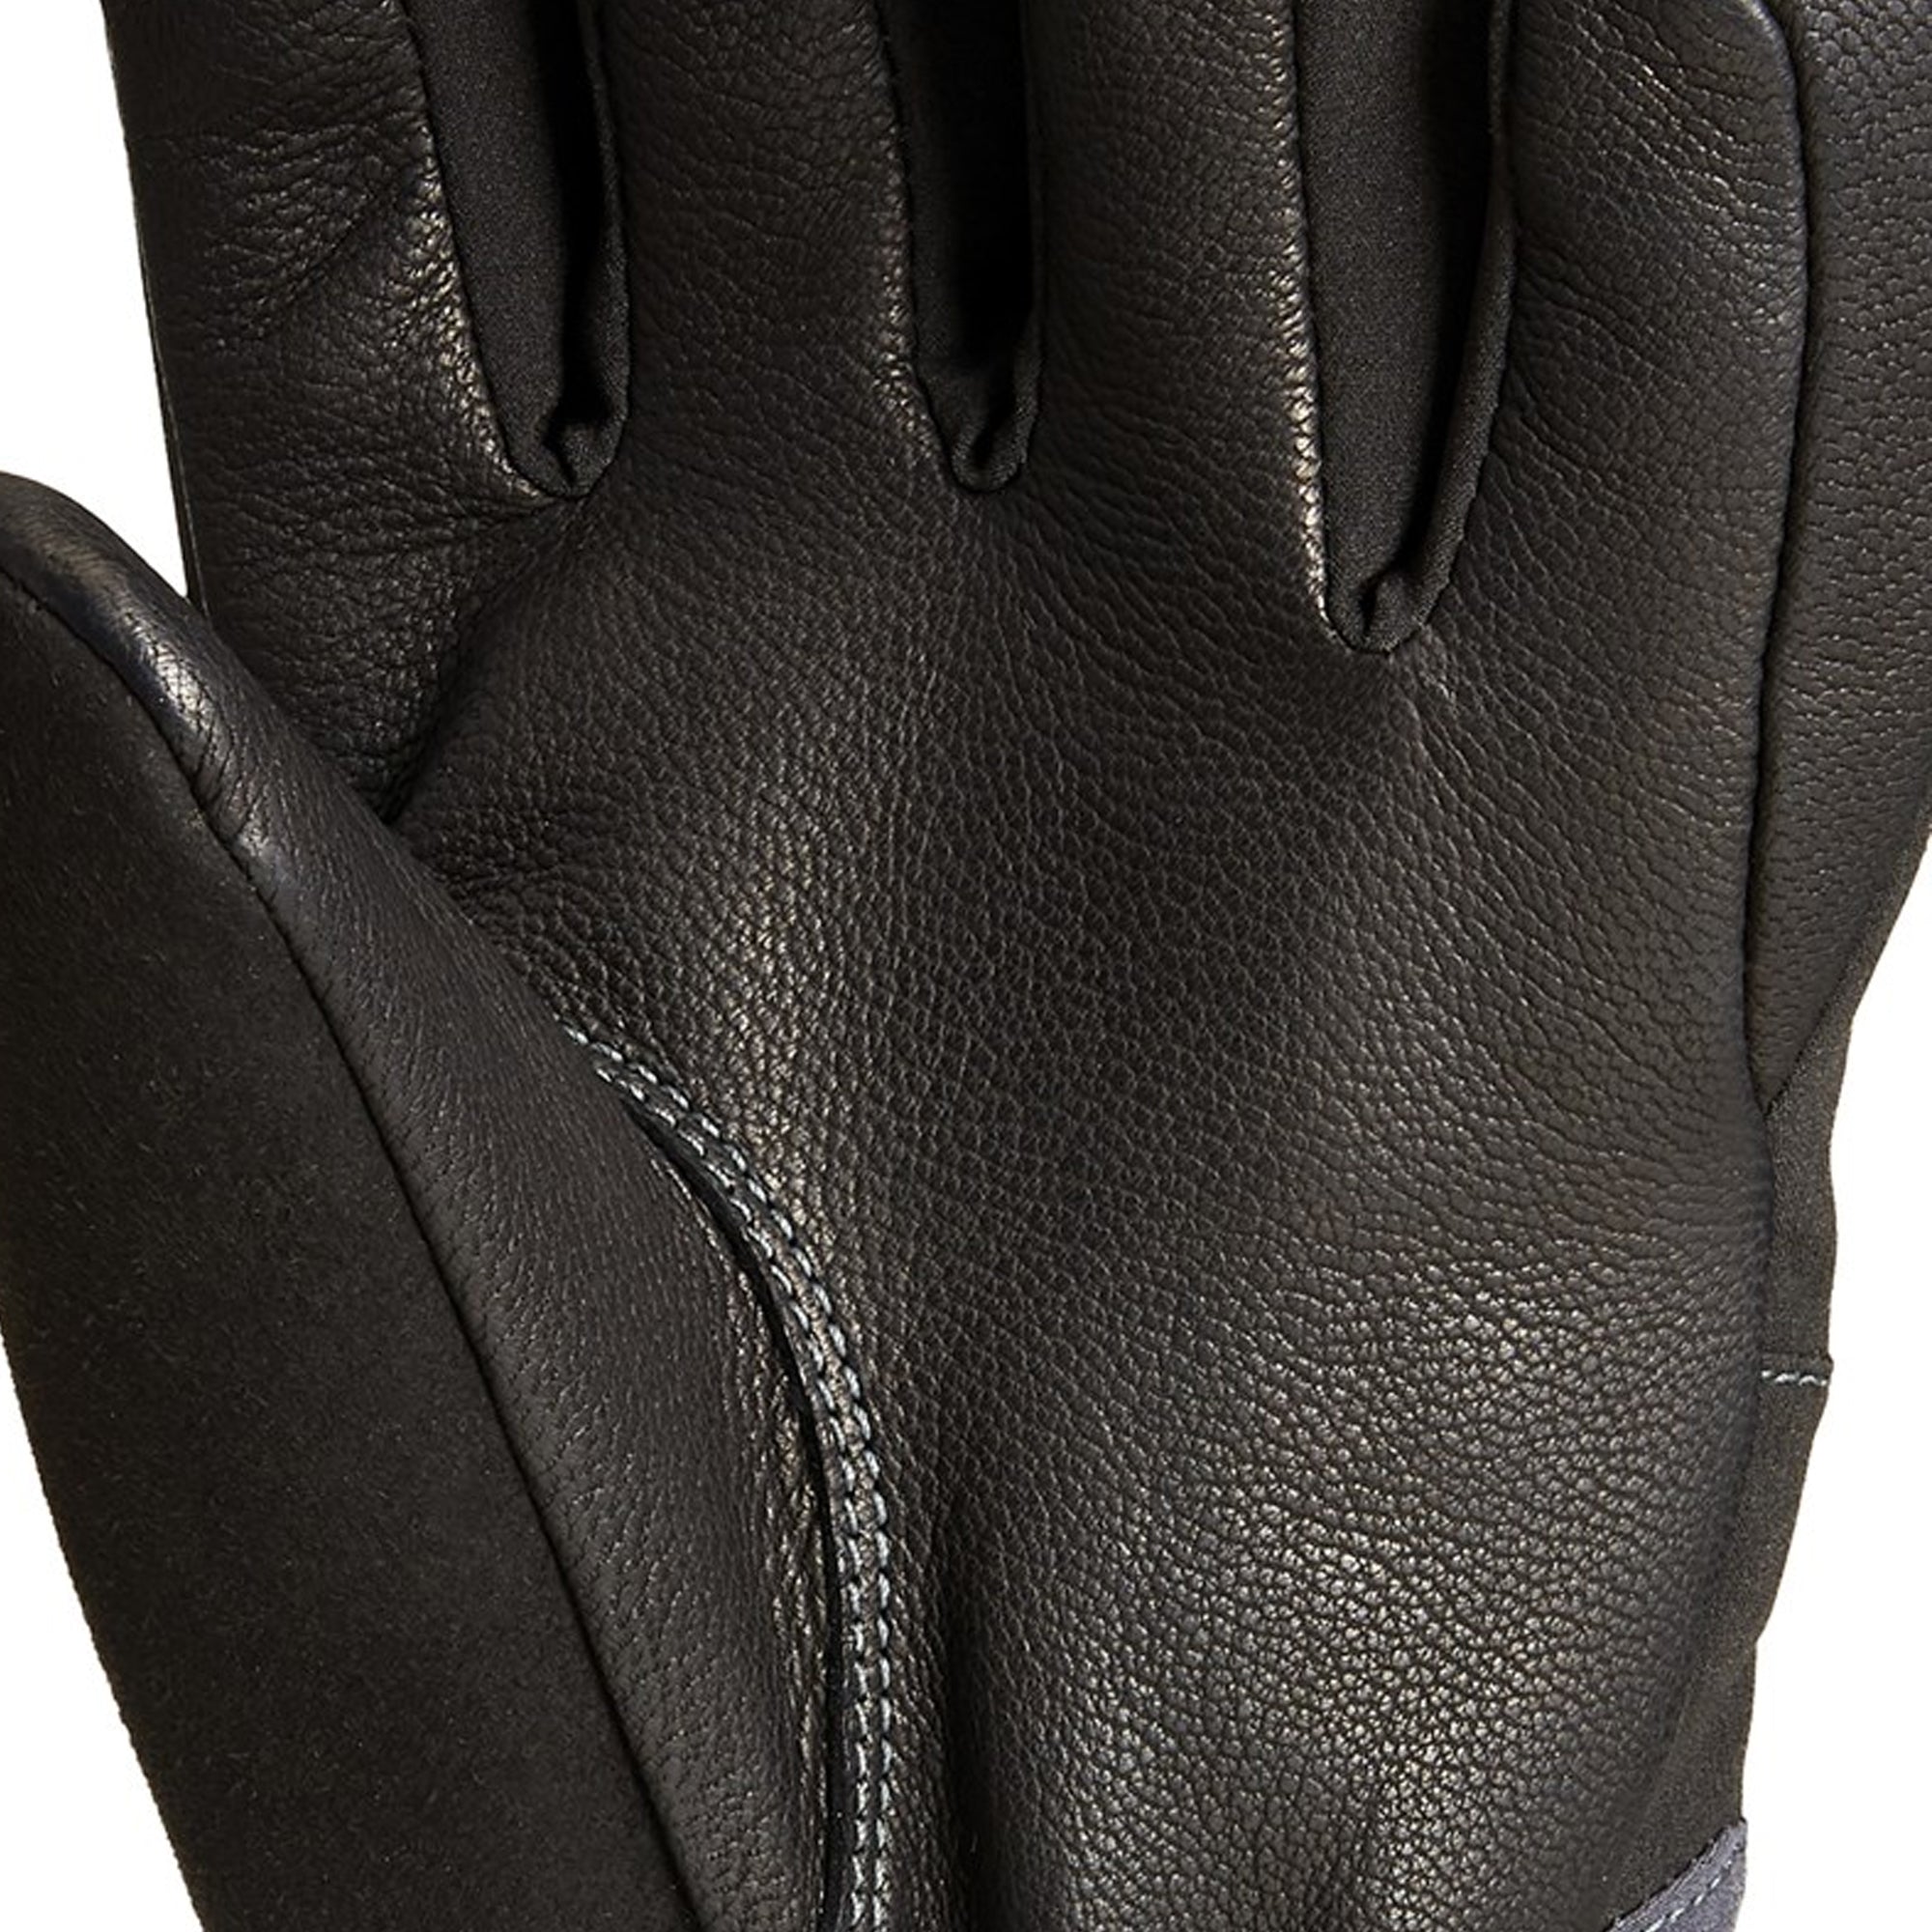 Genuine OEM Polaris Northstar Gloves